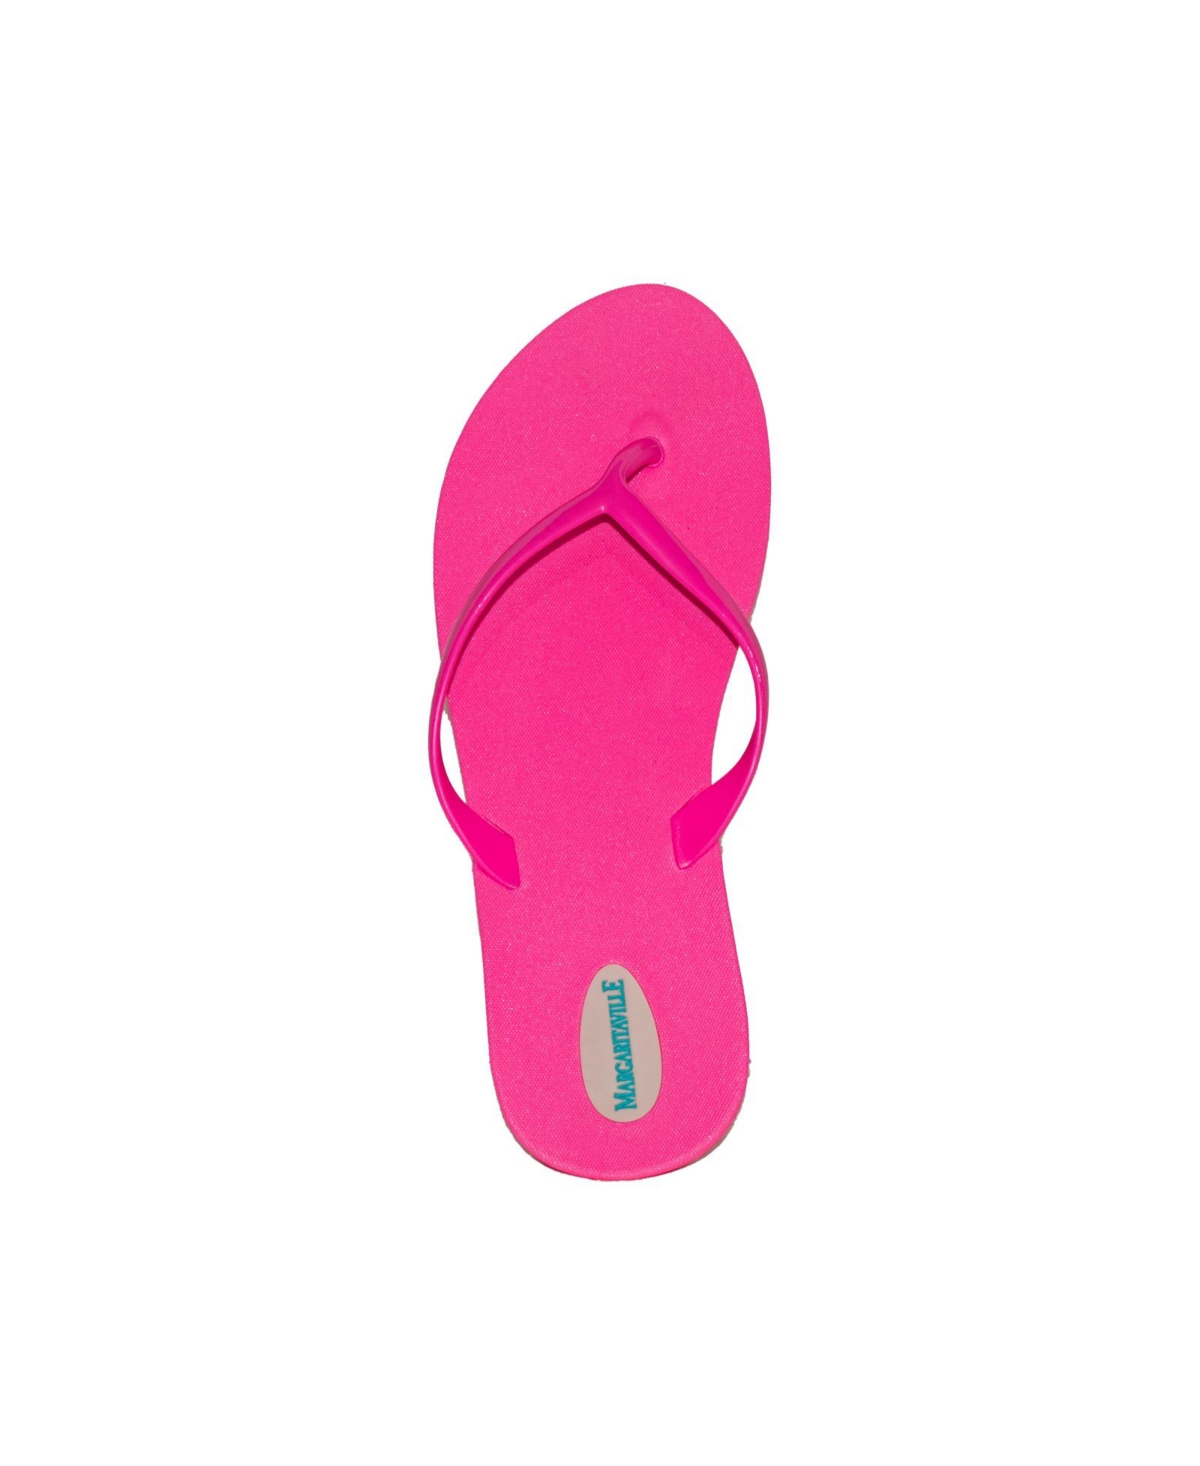 Women's Sandals Shoreline Flip Flop - Salt